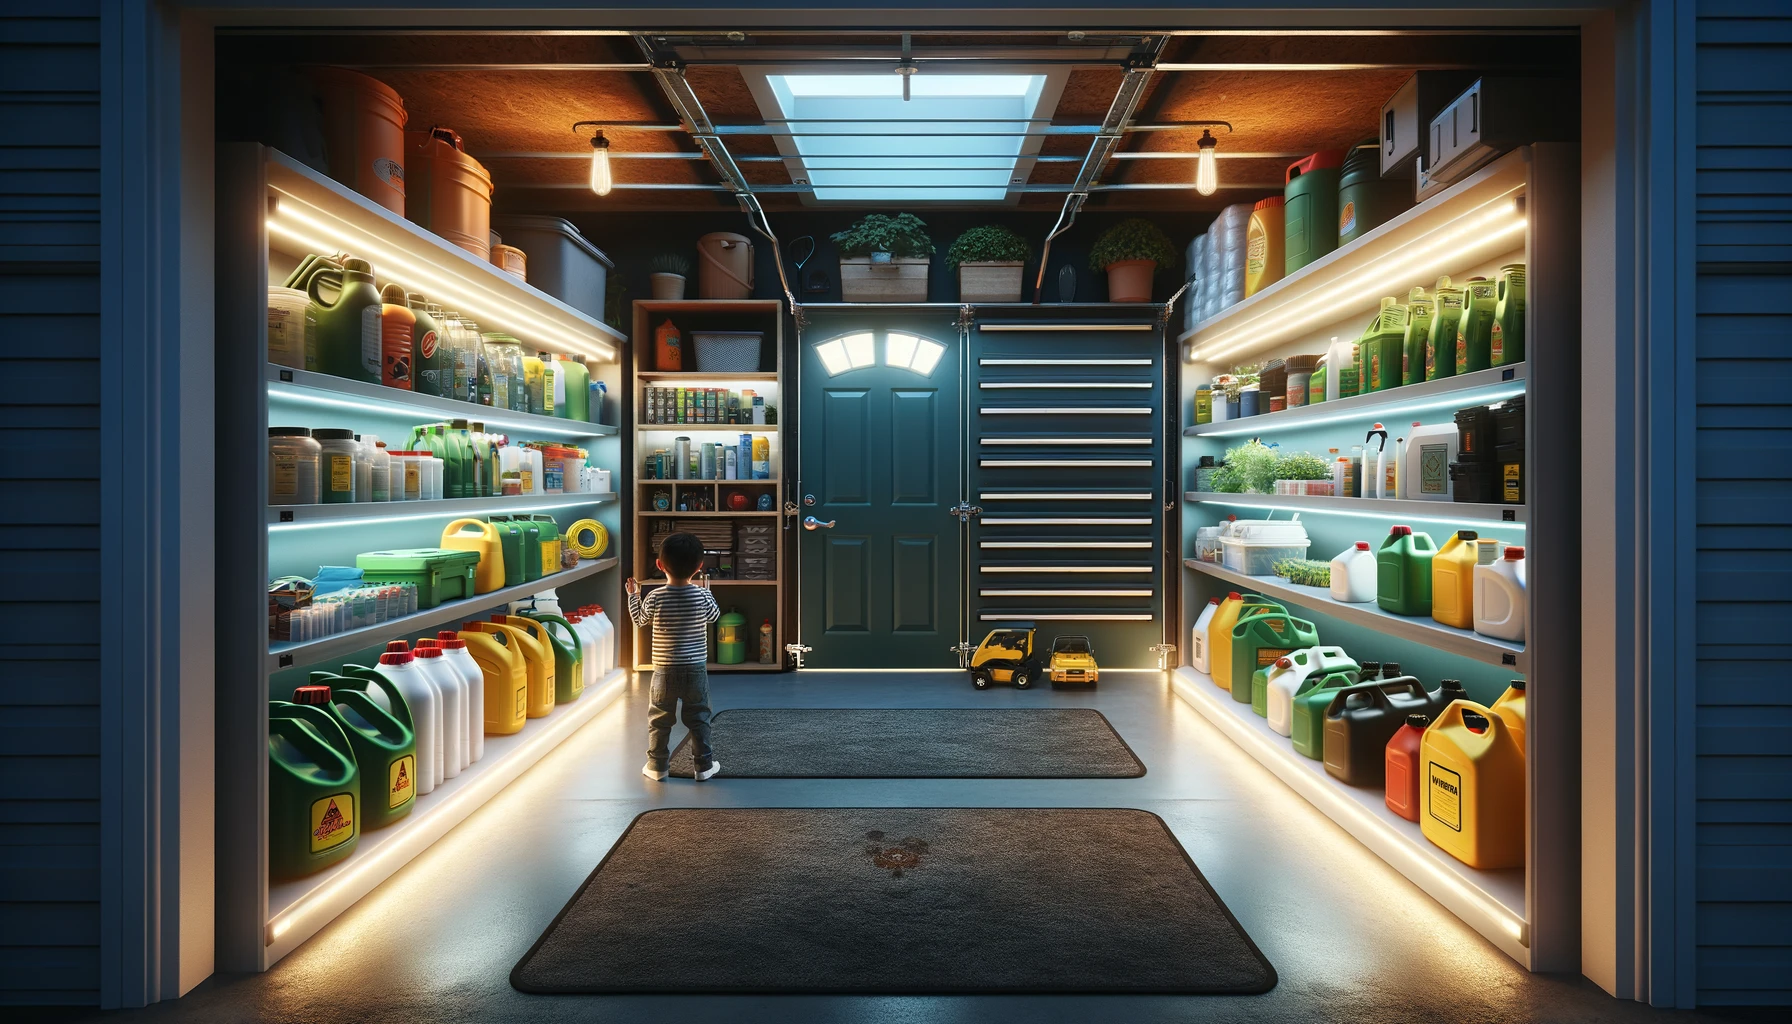 Organized garage interior with child exploring shelves.